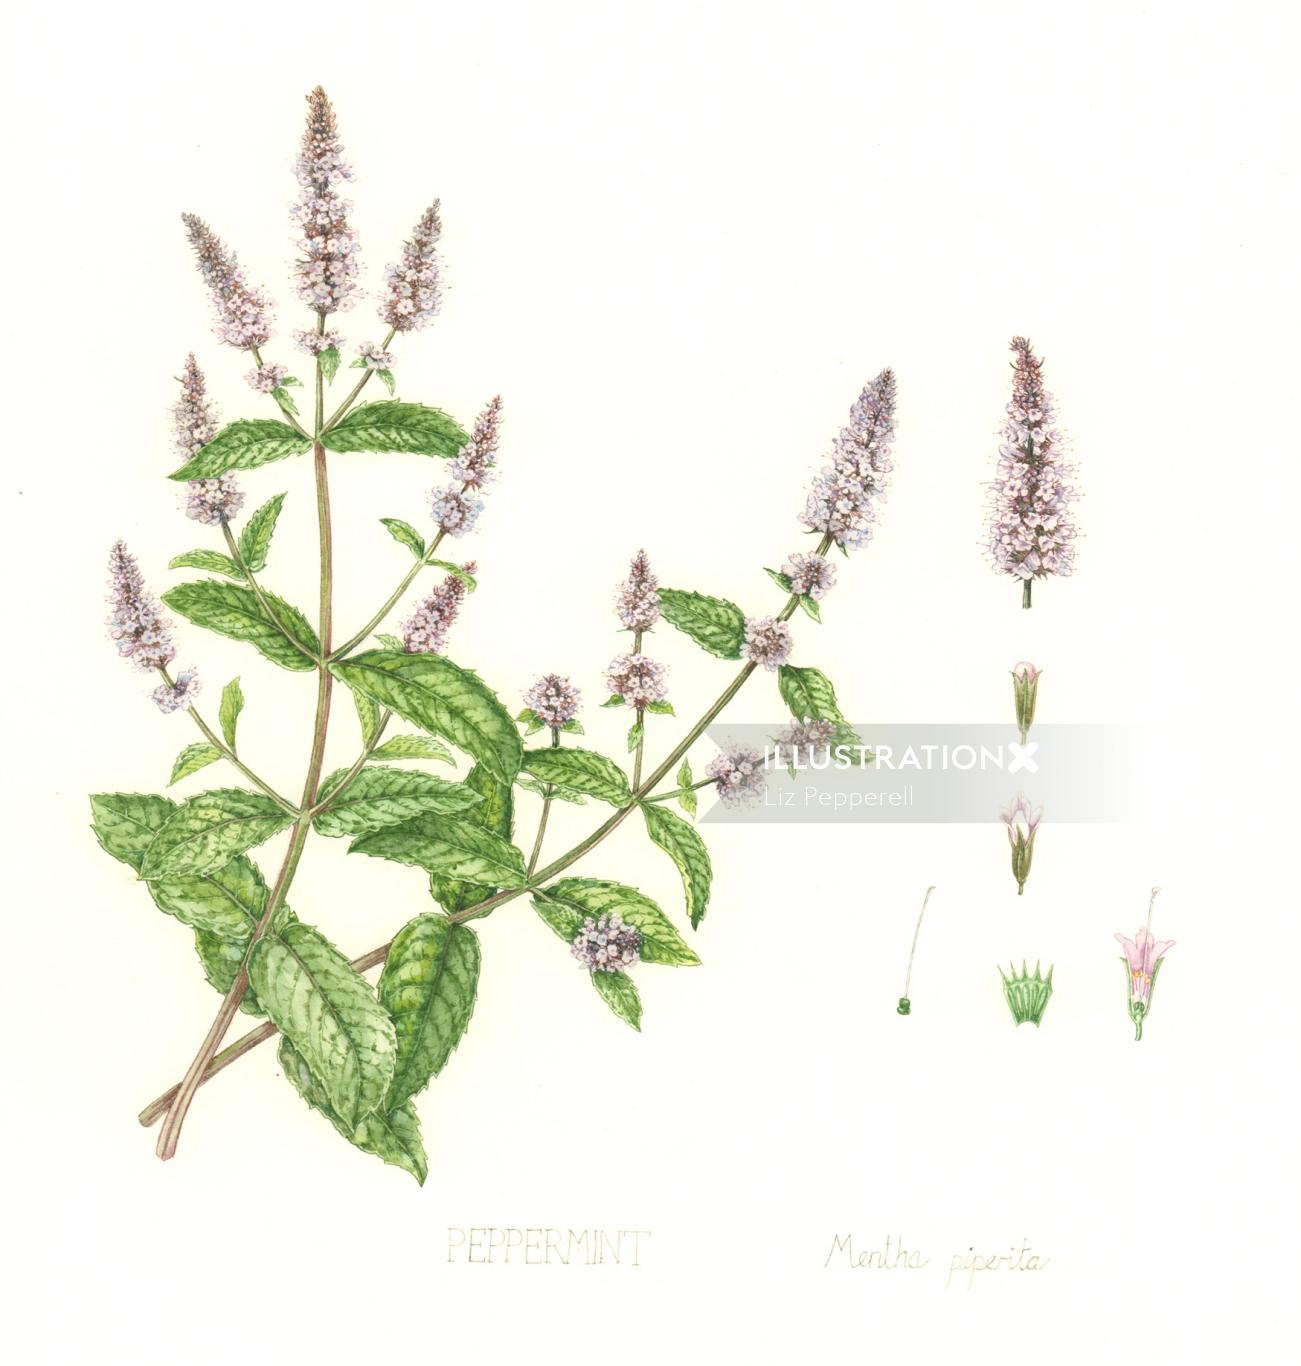 Nature illustration of common hedgenettle plant